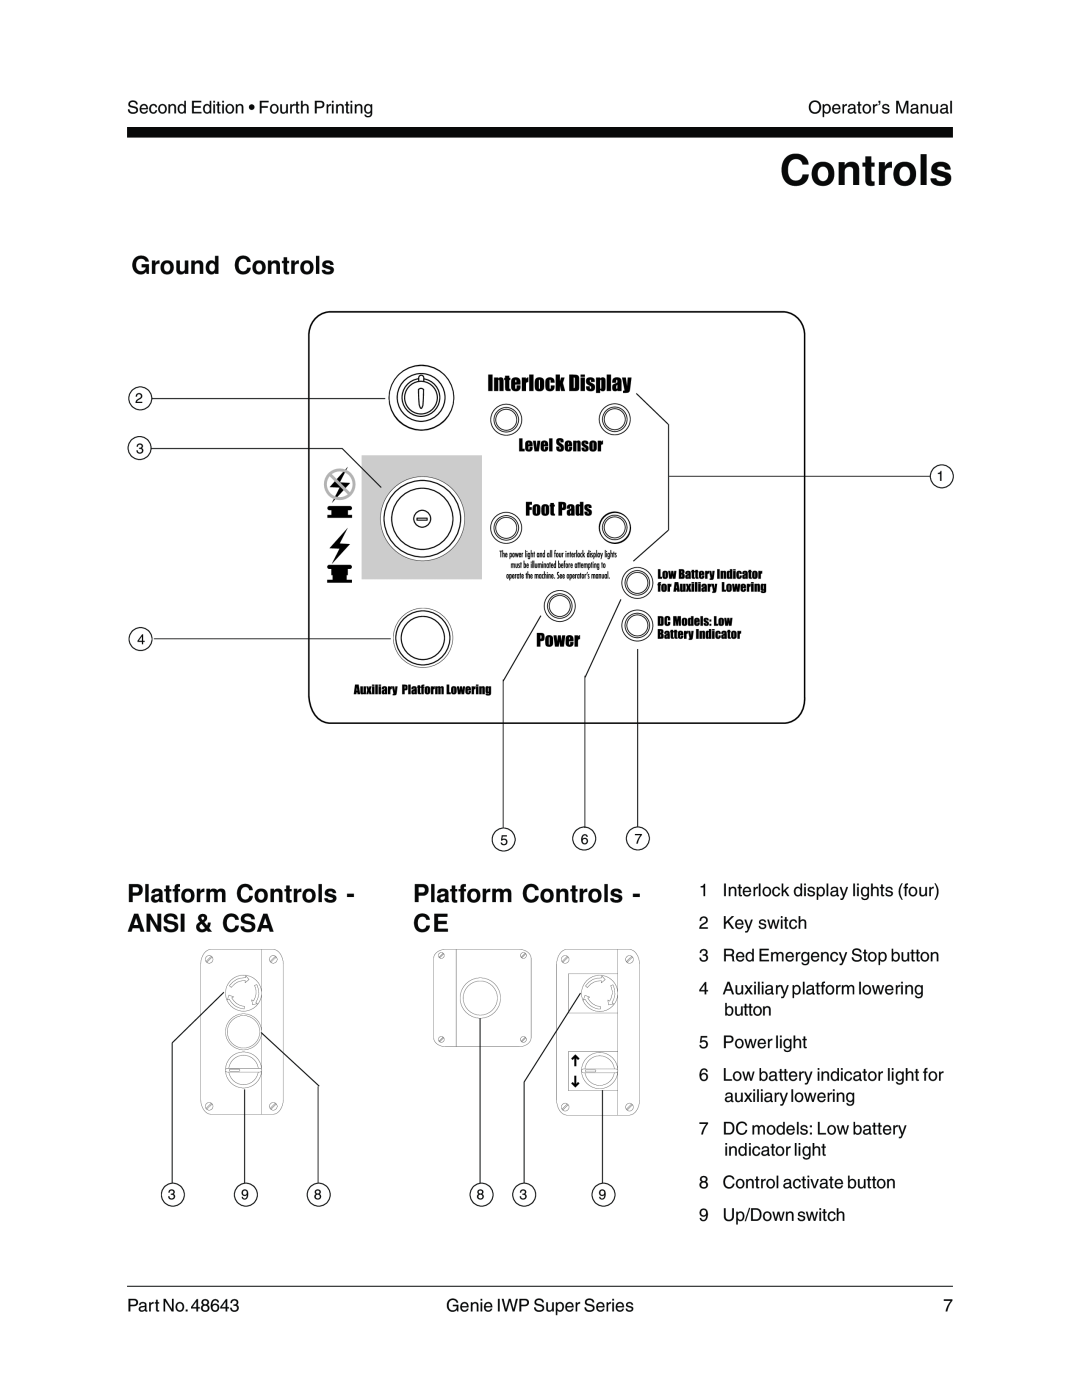 Genie 48643 manual Ground Controls, Platform Controls, Ansi & Csa 